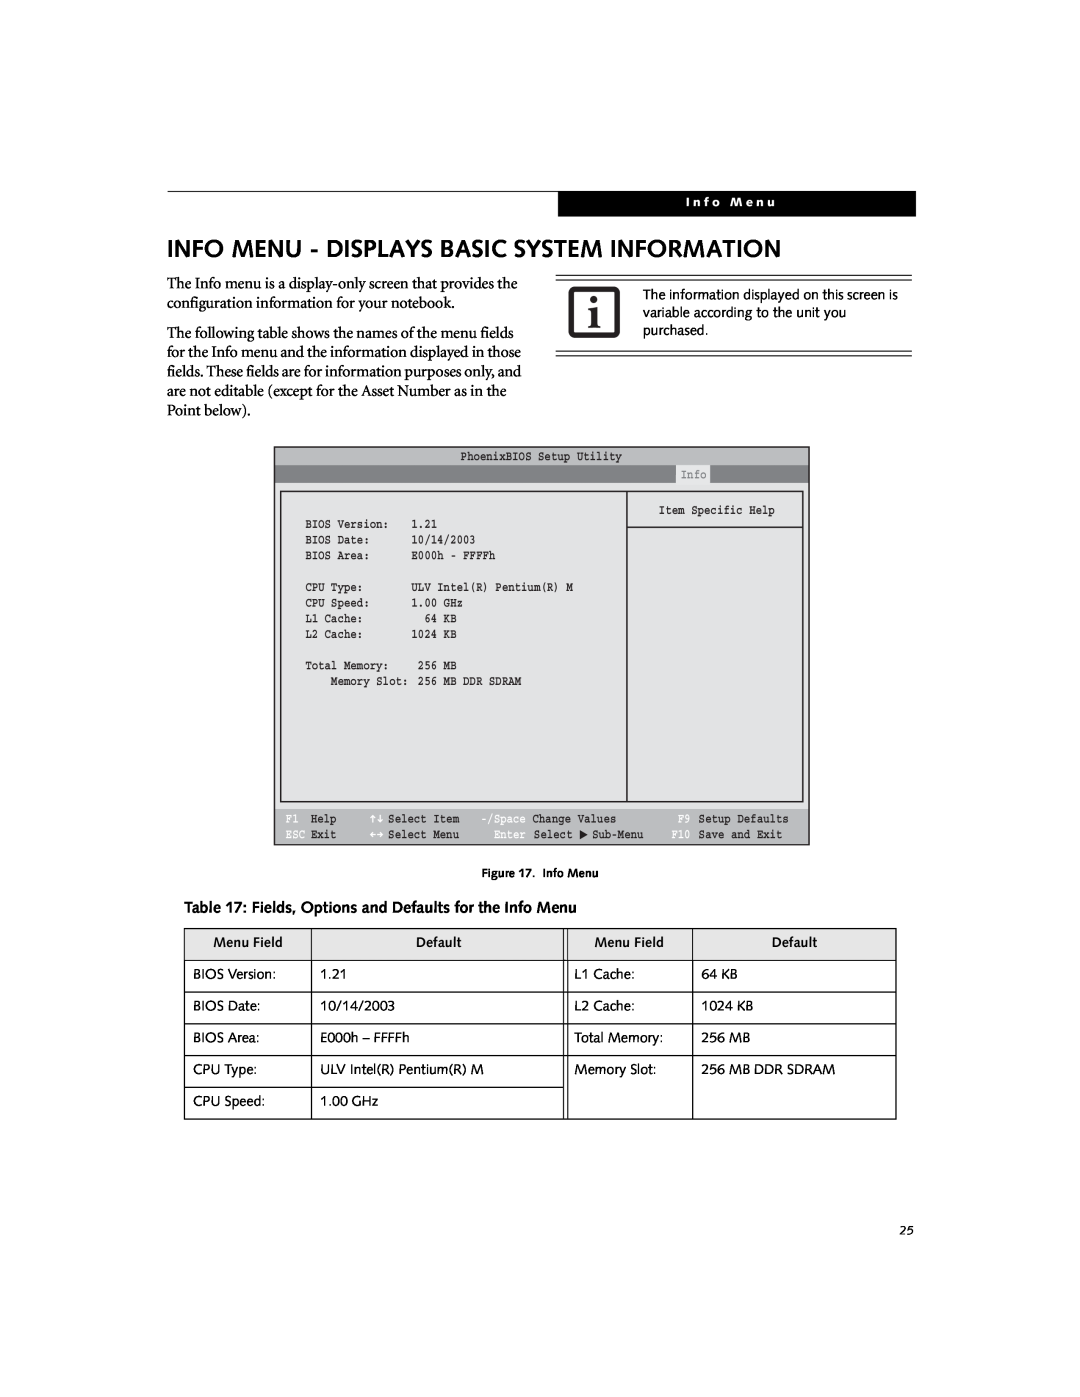 Fujitsu Siemens Computers B3000 manual Info Menu - Displays Basic System Information 